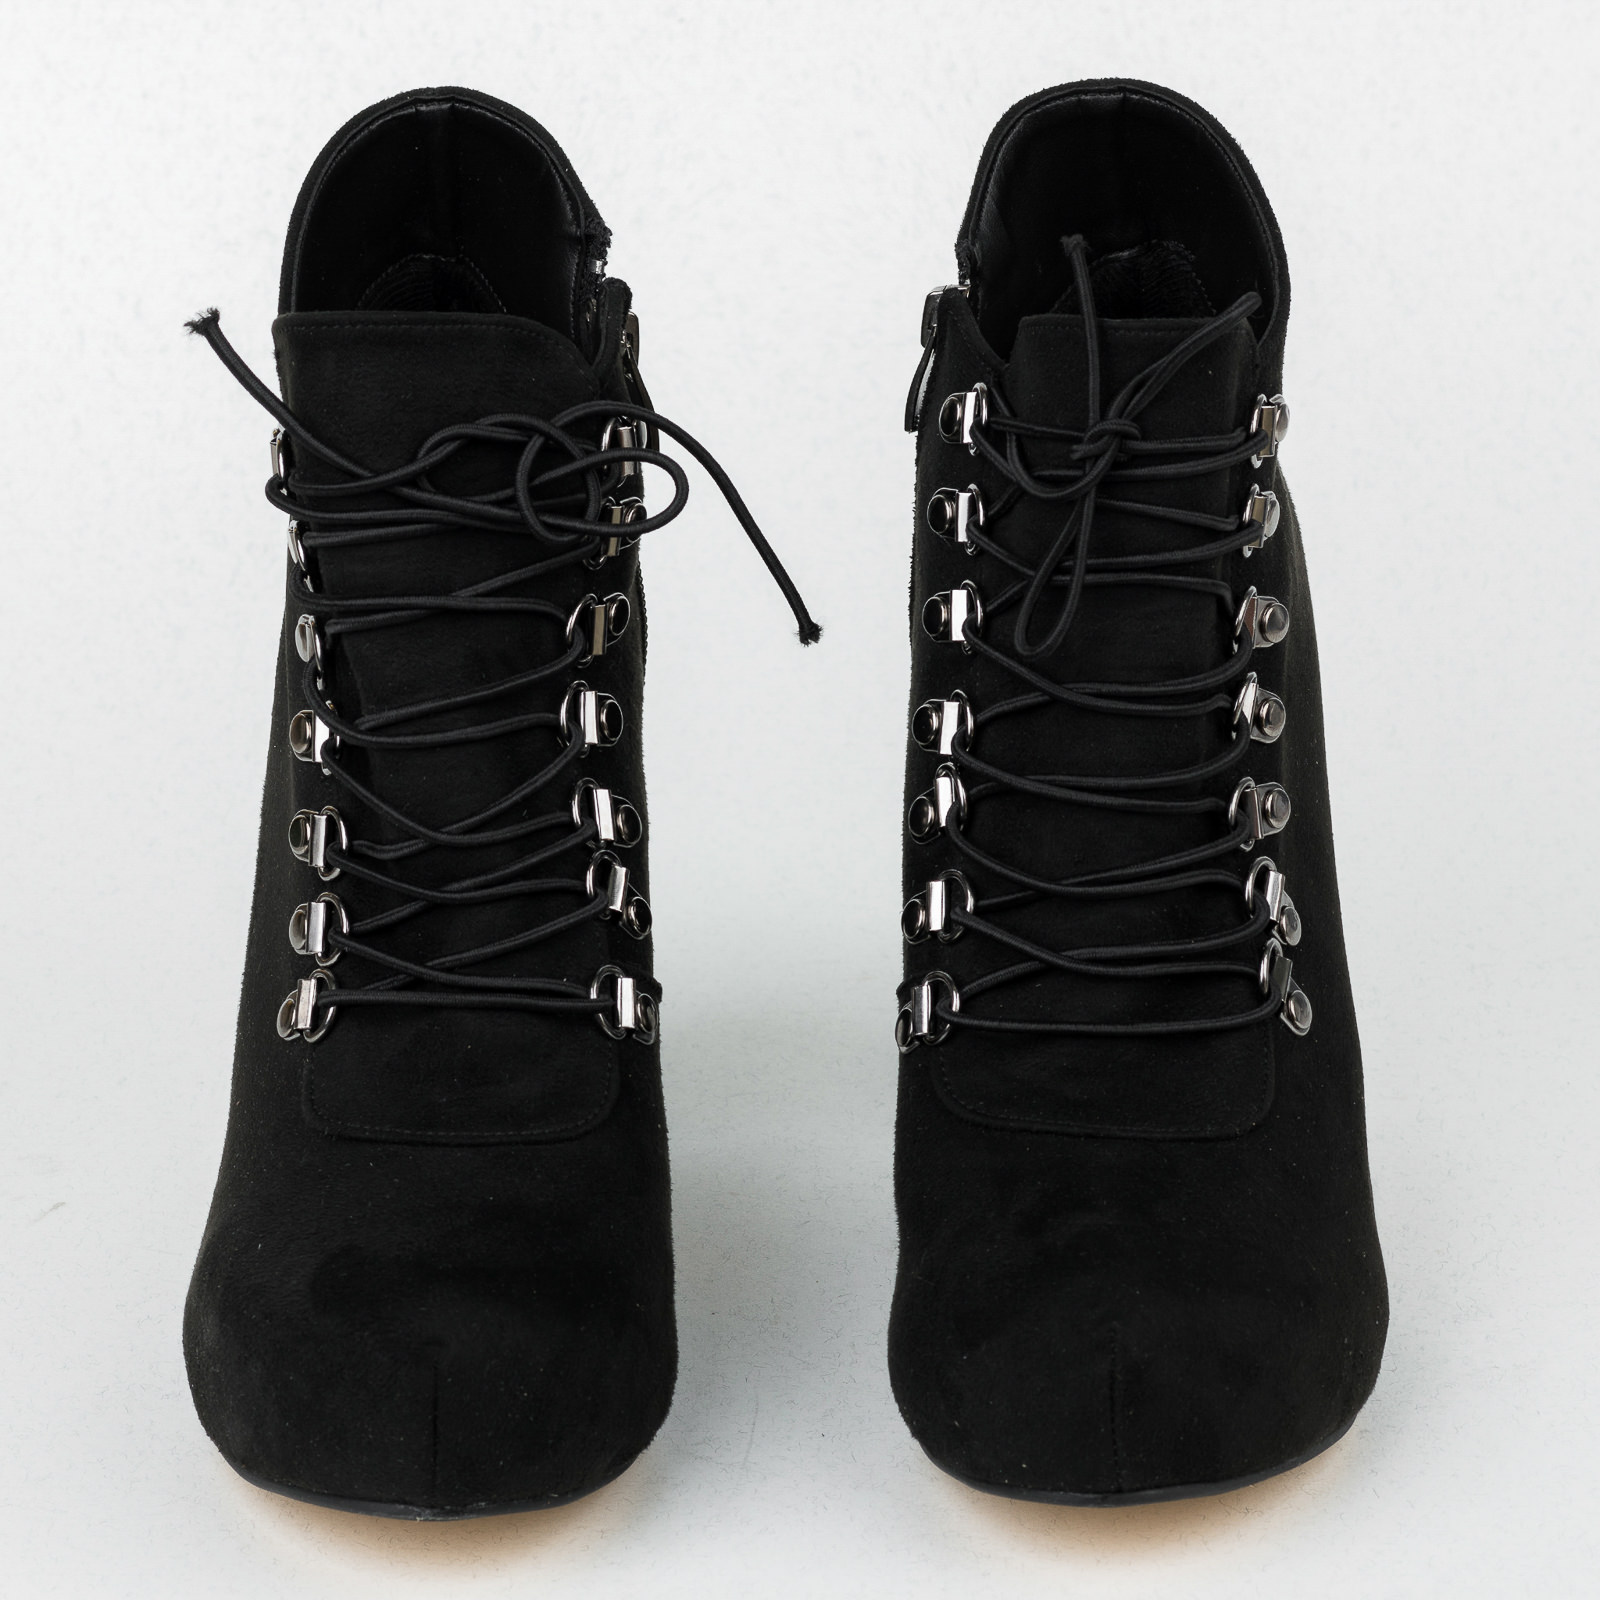 Women ankle boots B415 - BLACK